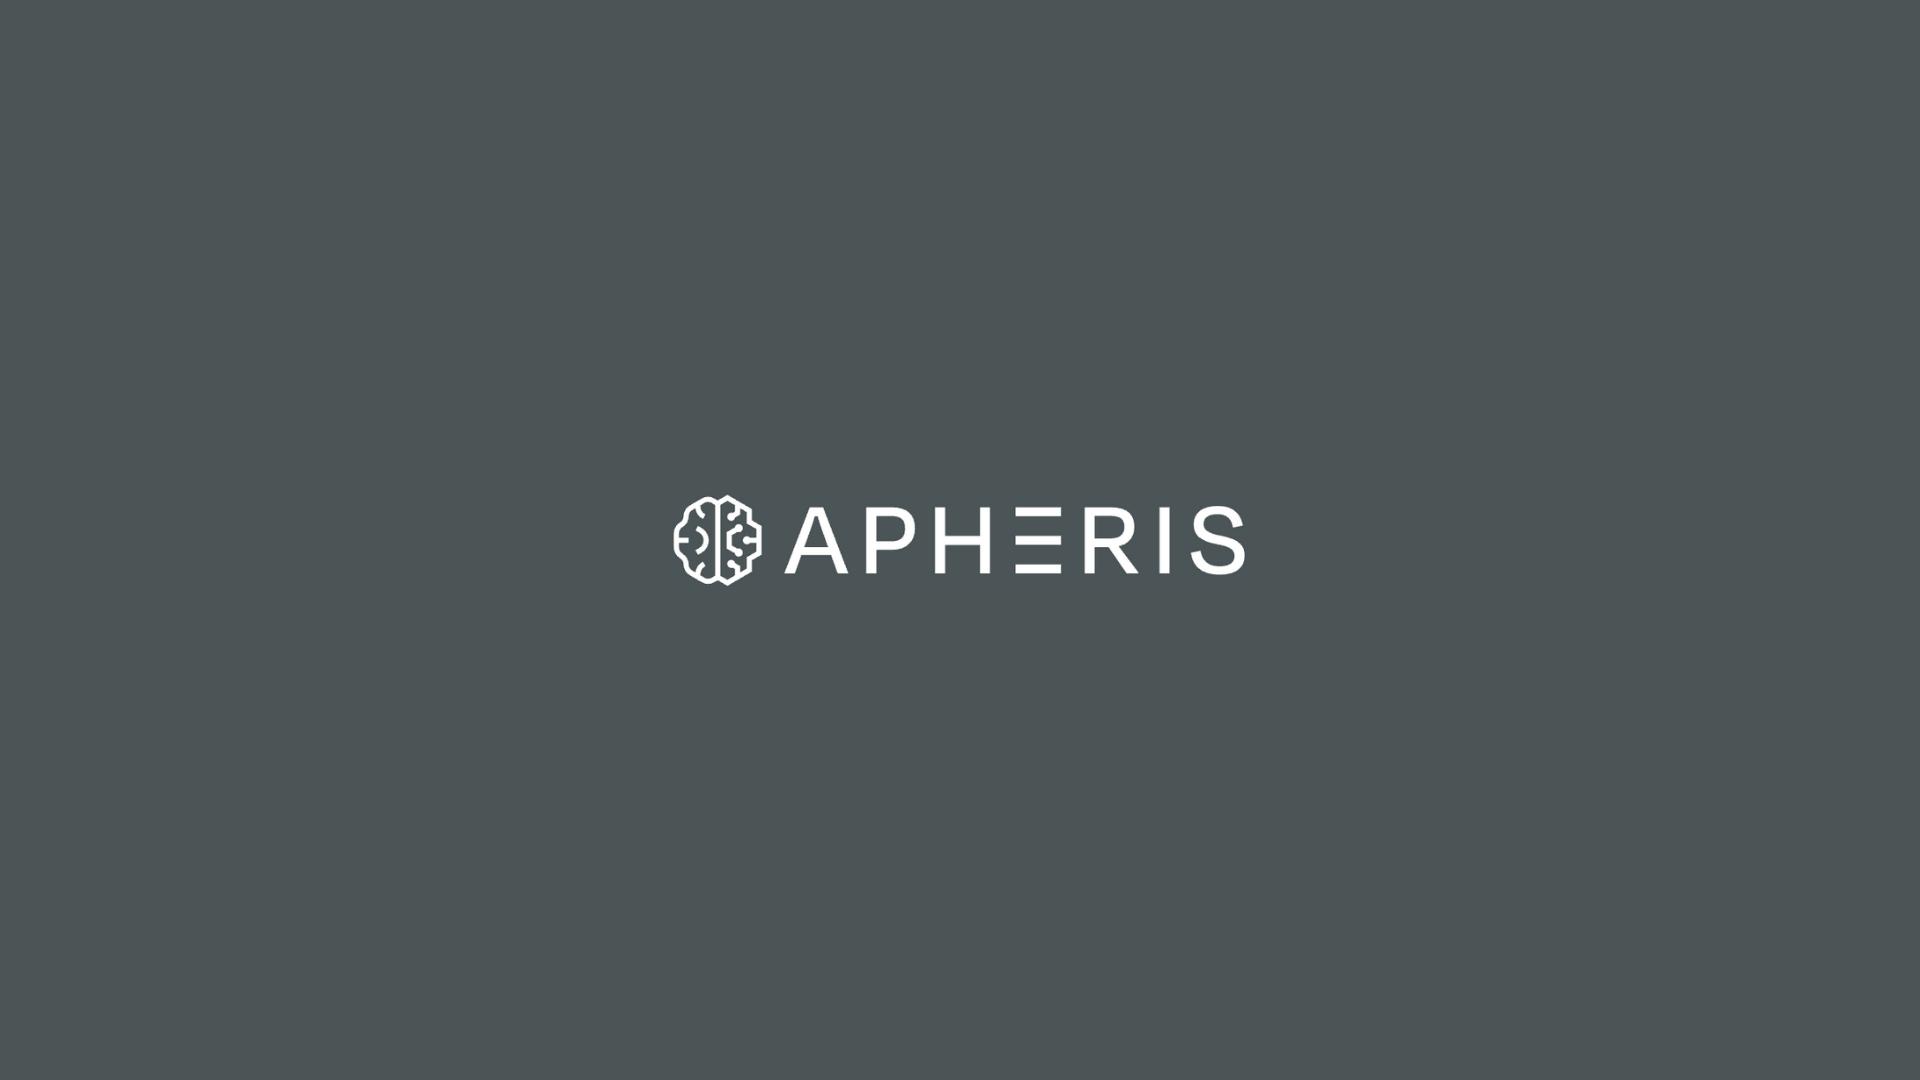 Apheris